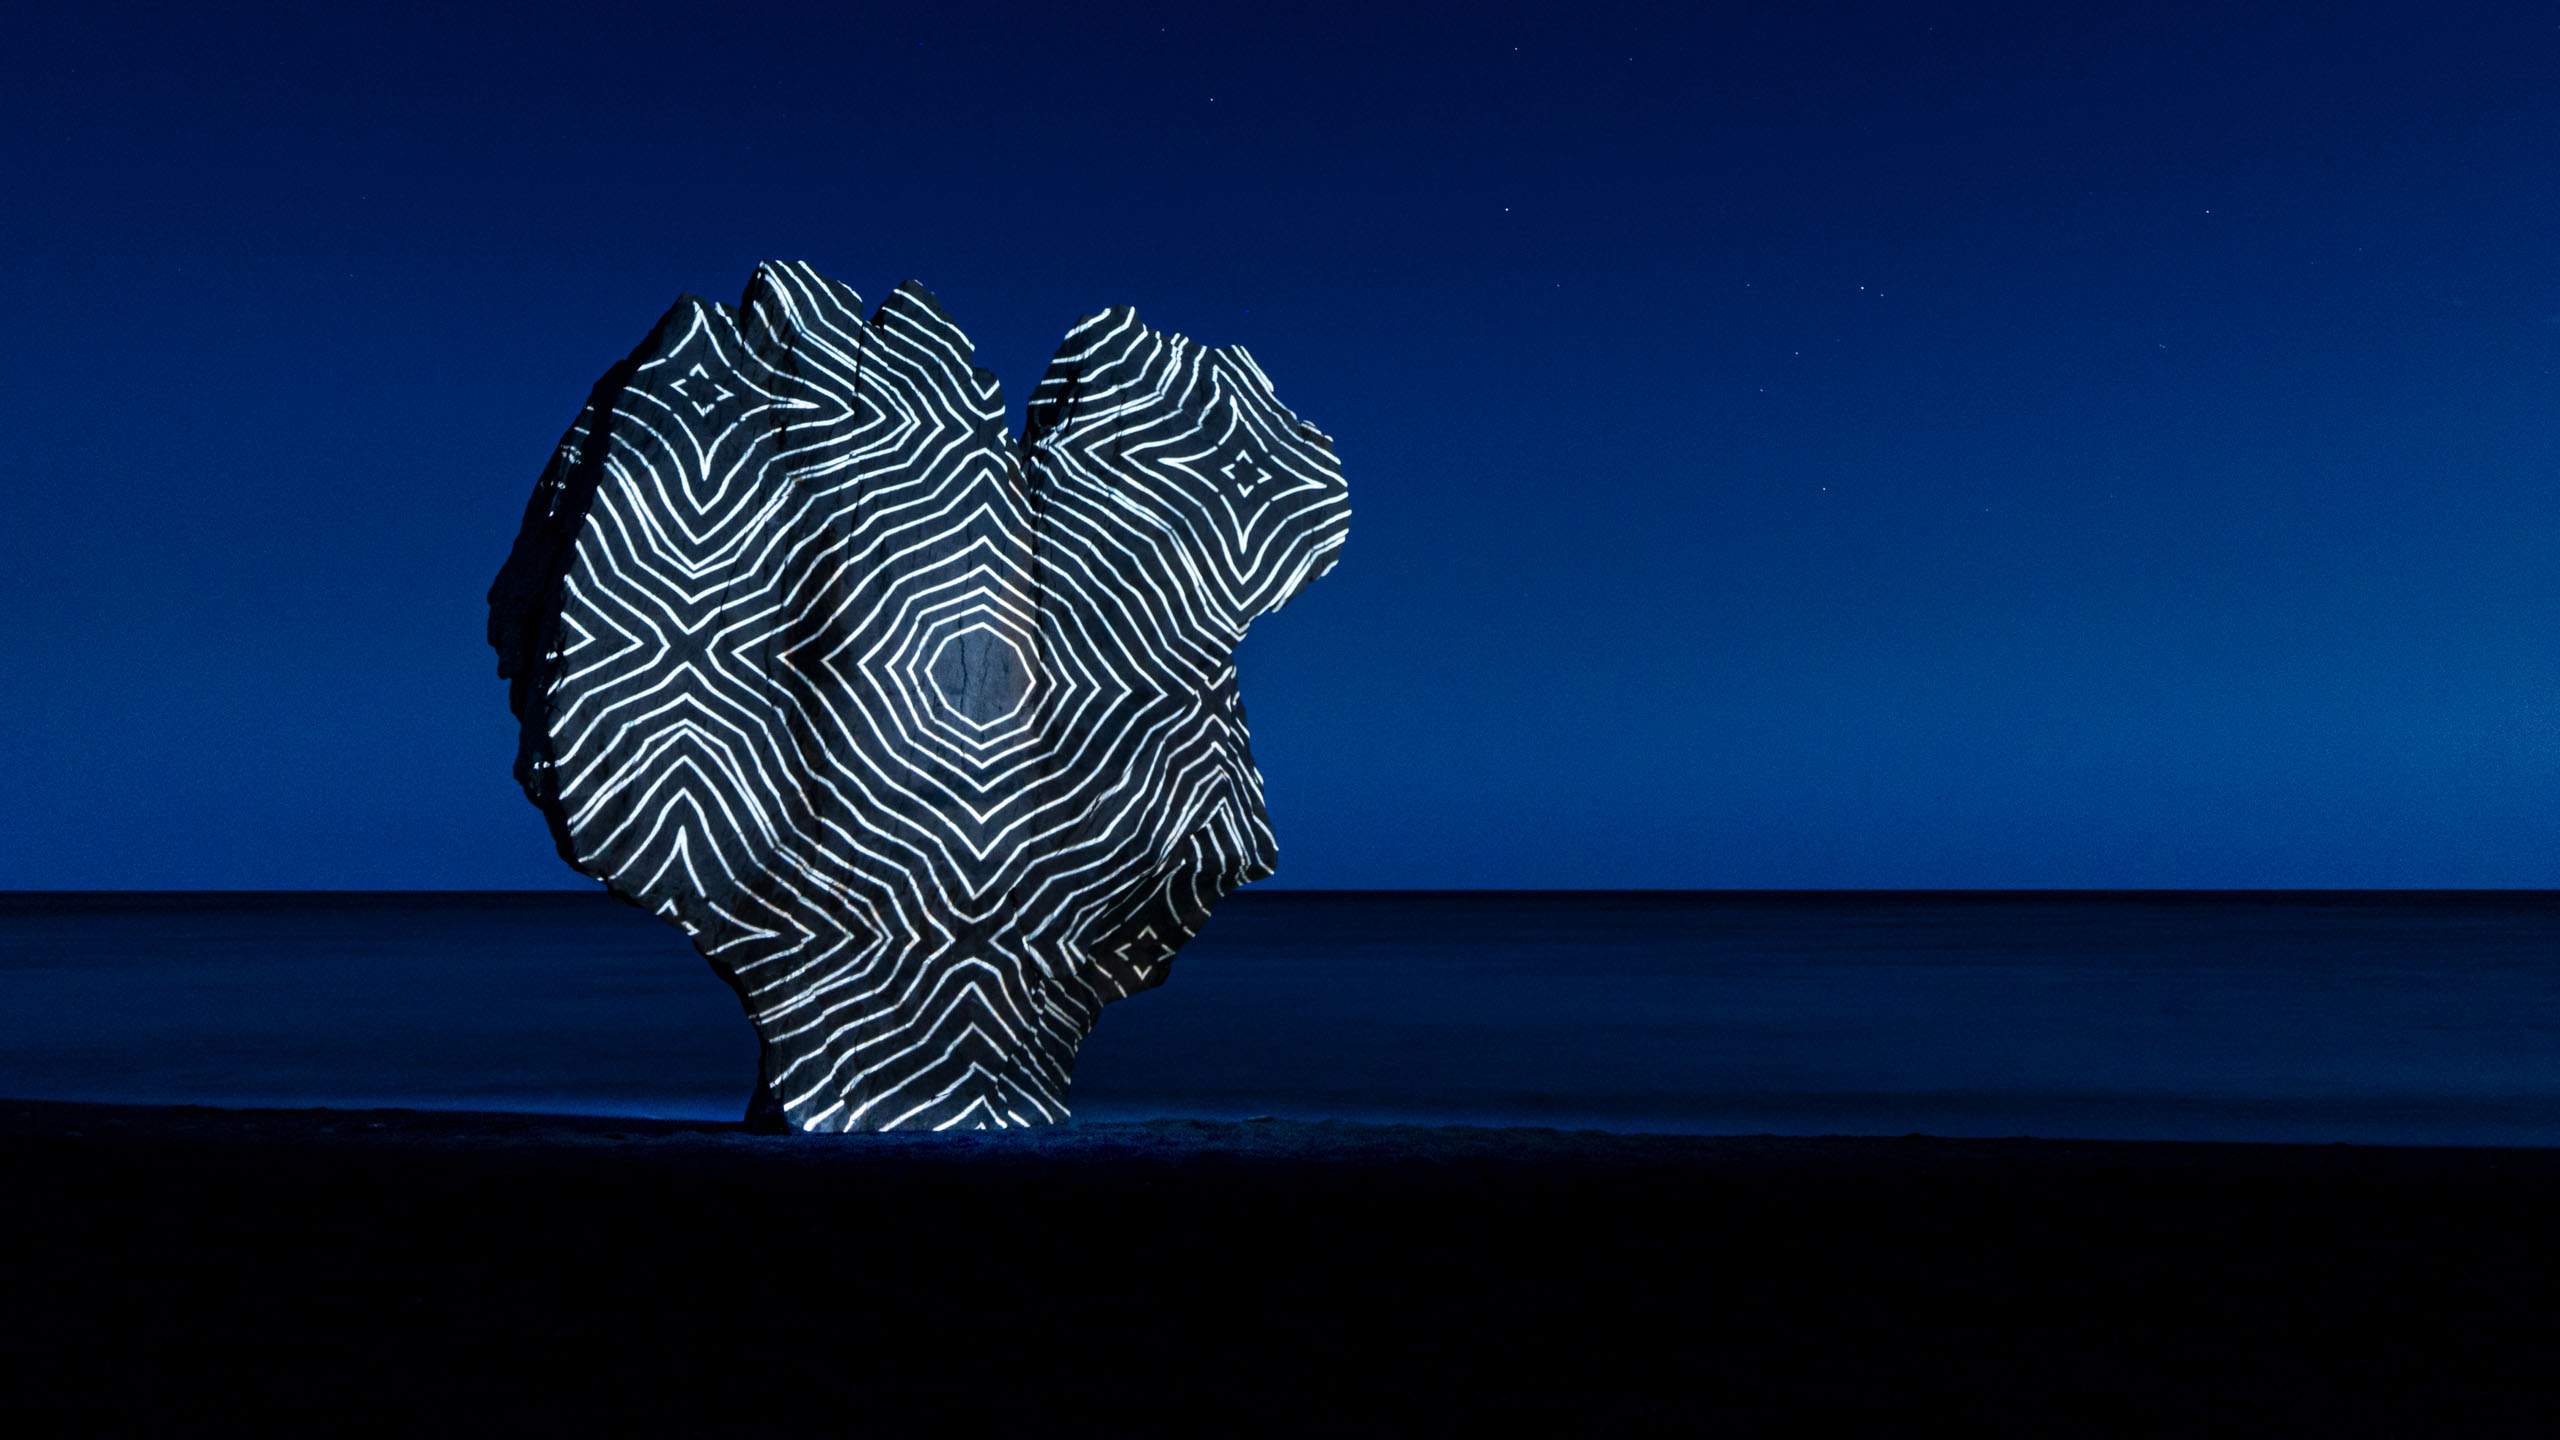 Heart shaped rock with mesmerizing pattern land art installation